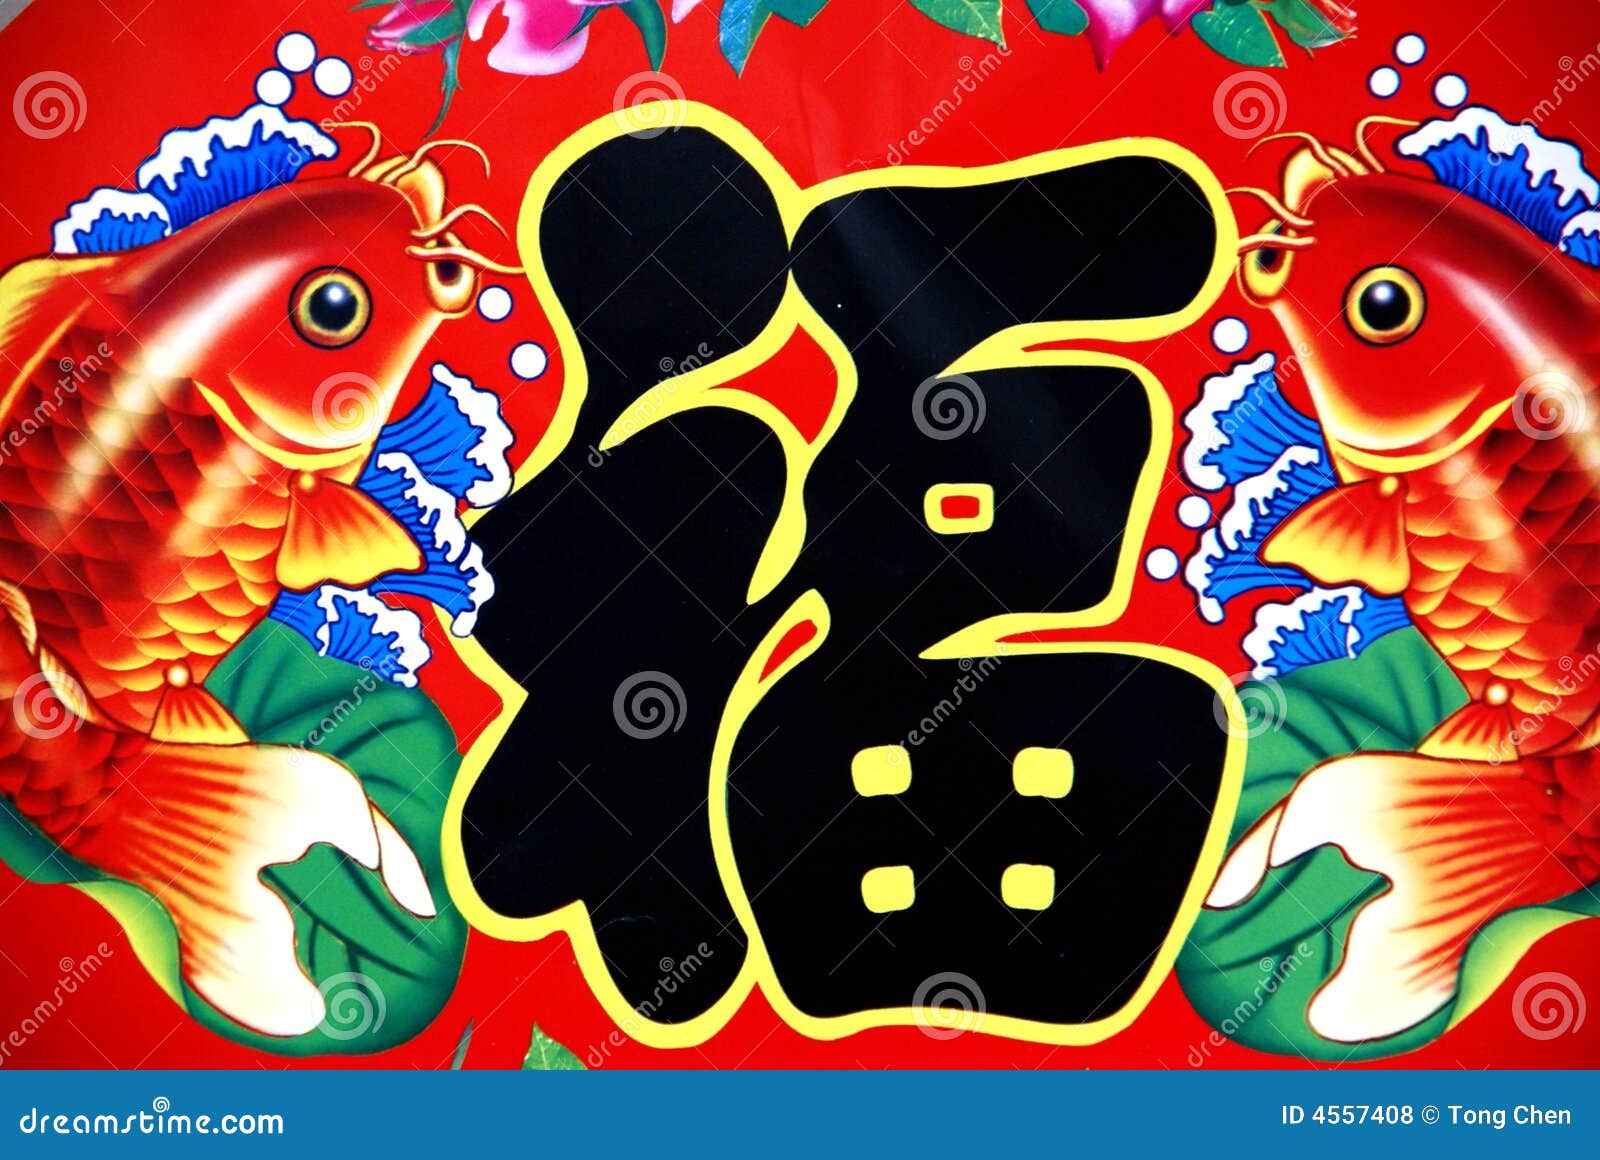 Chinese new year stock photo. Image of lucky, year, china - 4557408